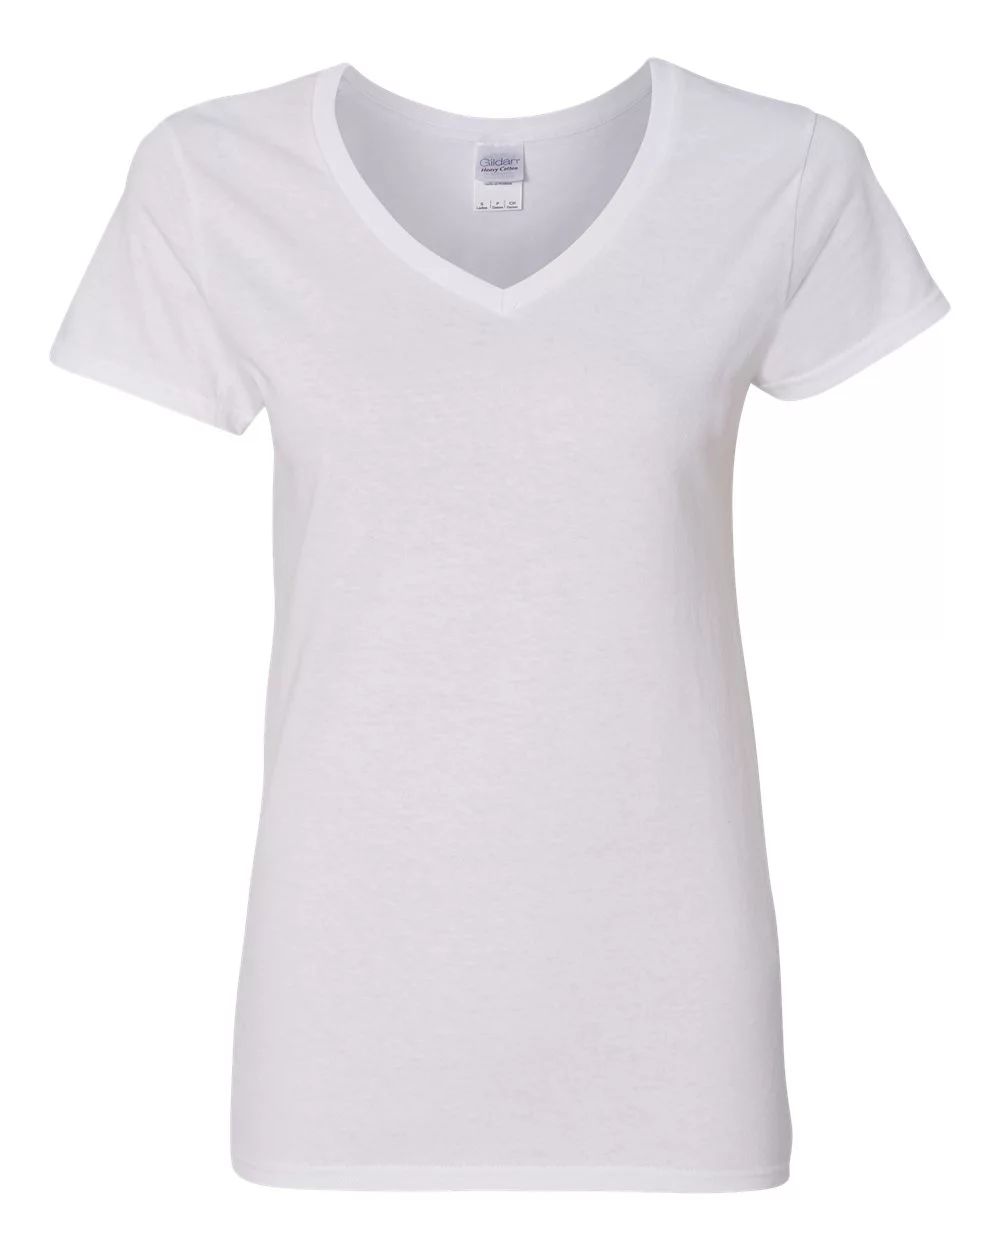 Gildan Women's Short Sleeve V Neck T-Shirt for Crafting - White, Size M, Soft Cotton, Classic Fit... | Walmart (US)